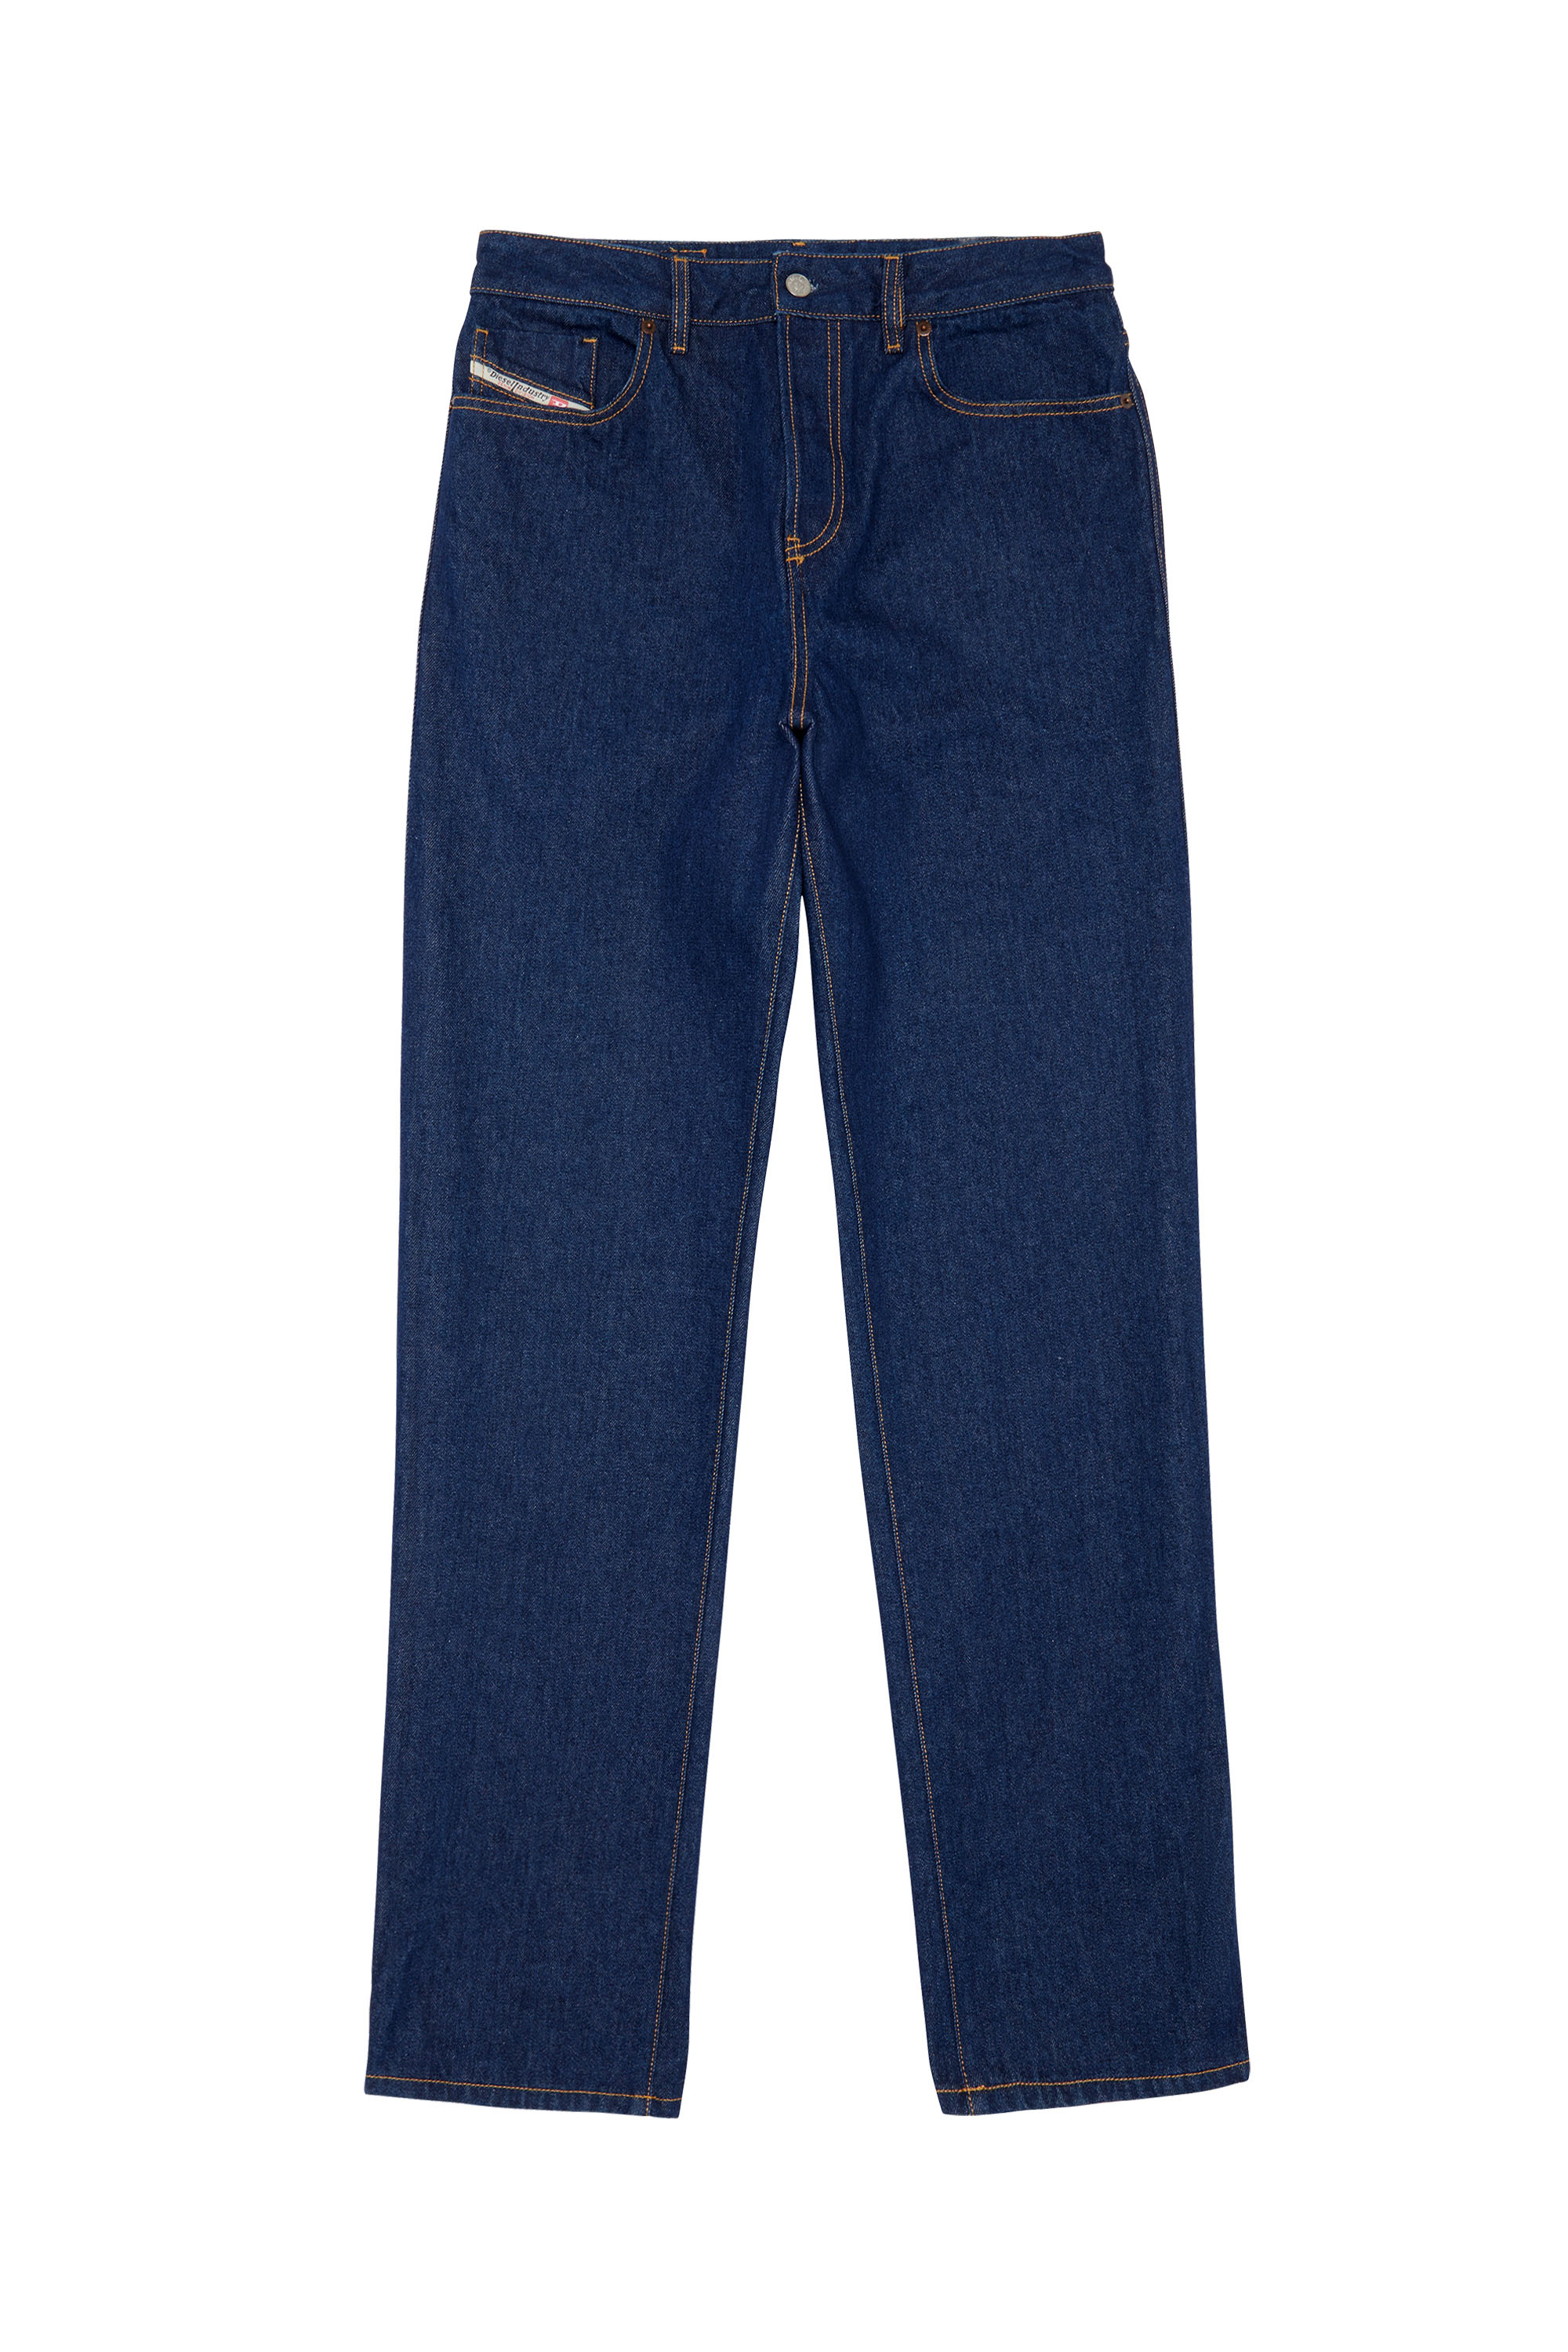 1955 007A5 Straight Jeans, Dunkelblau - Jeans